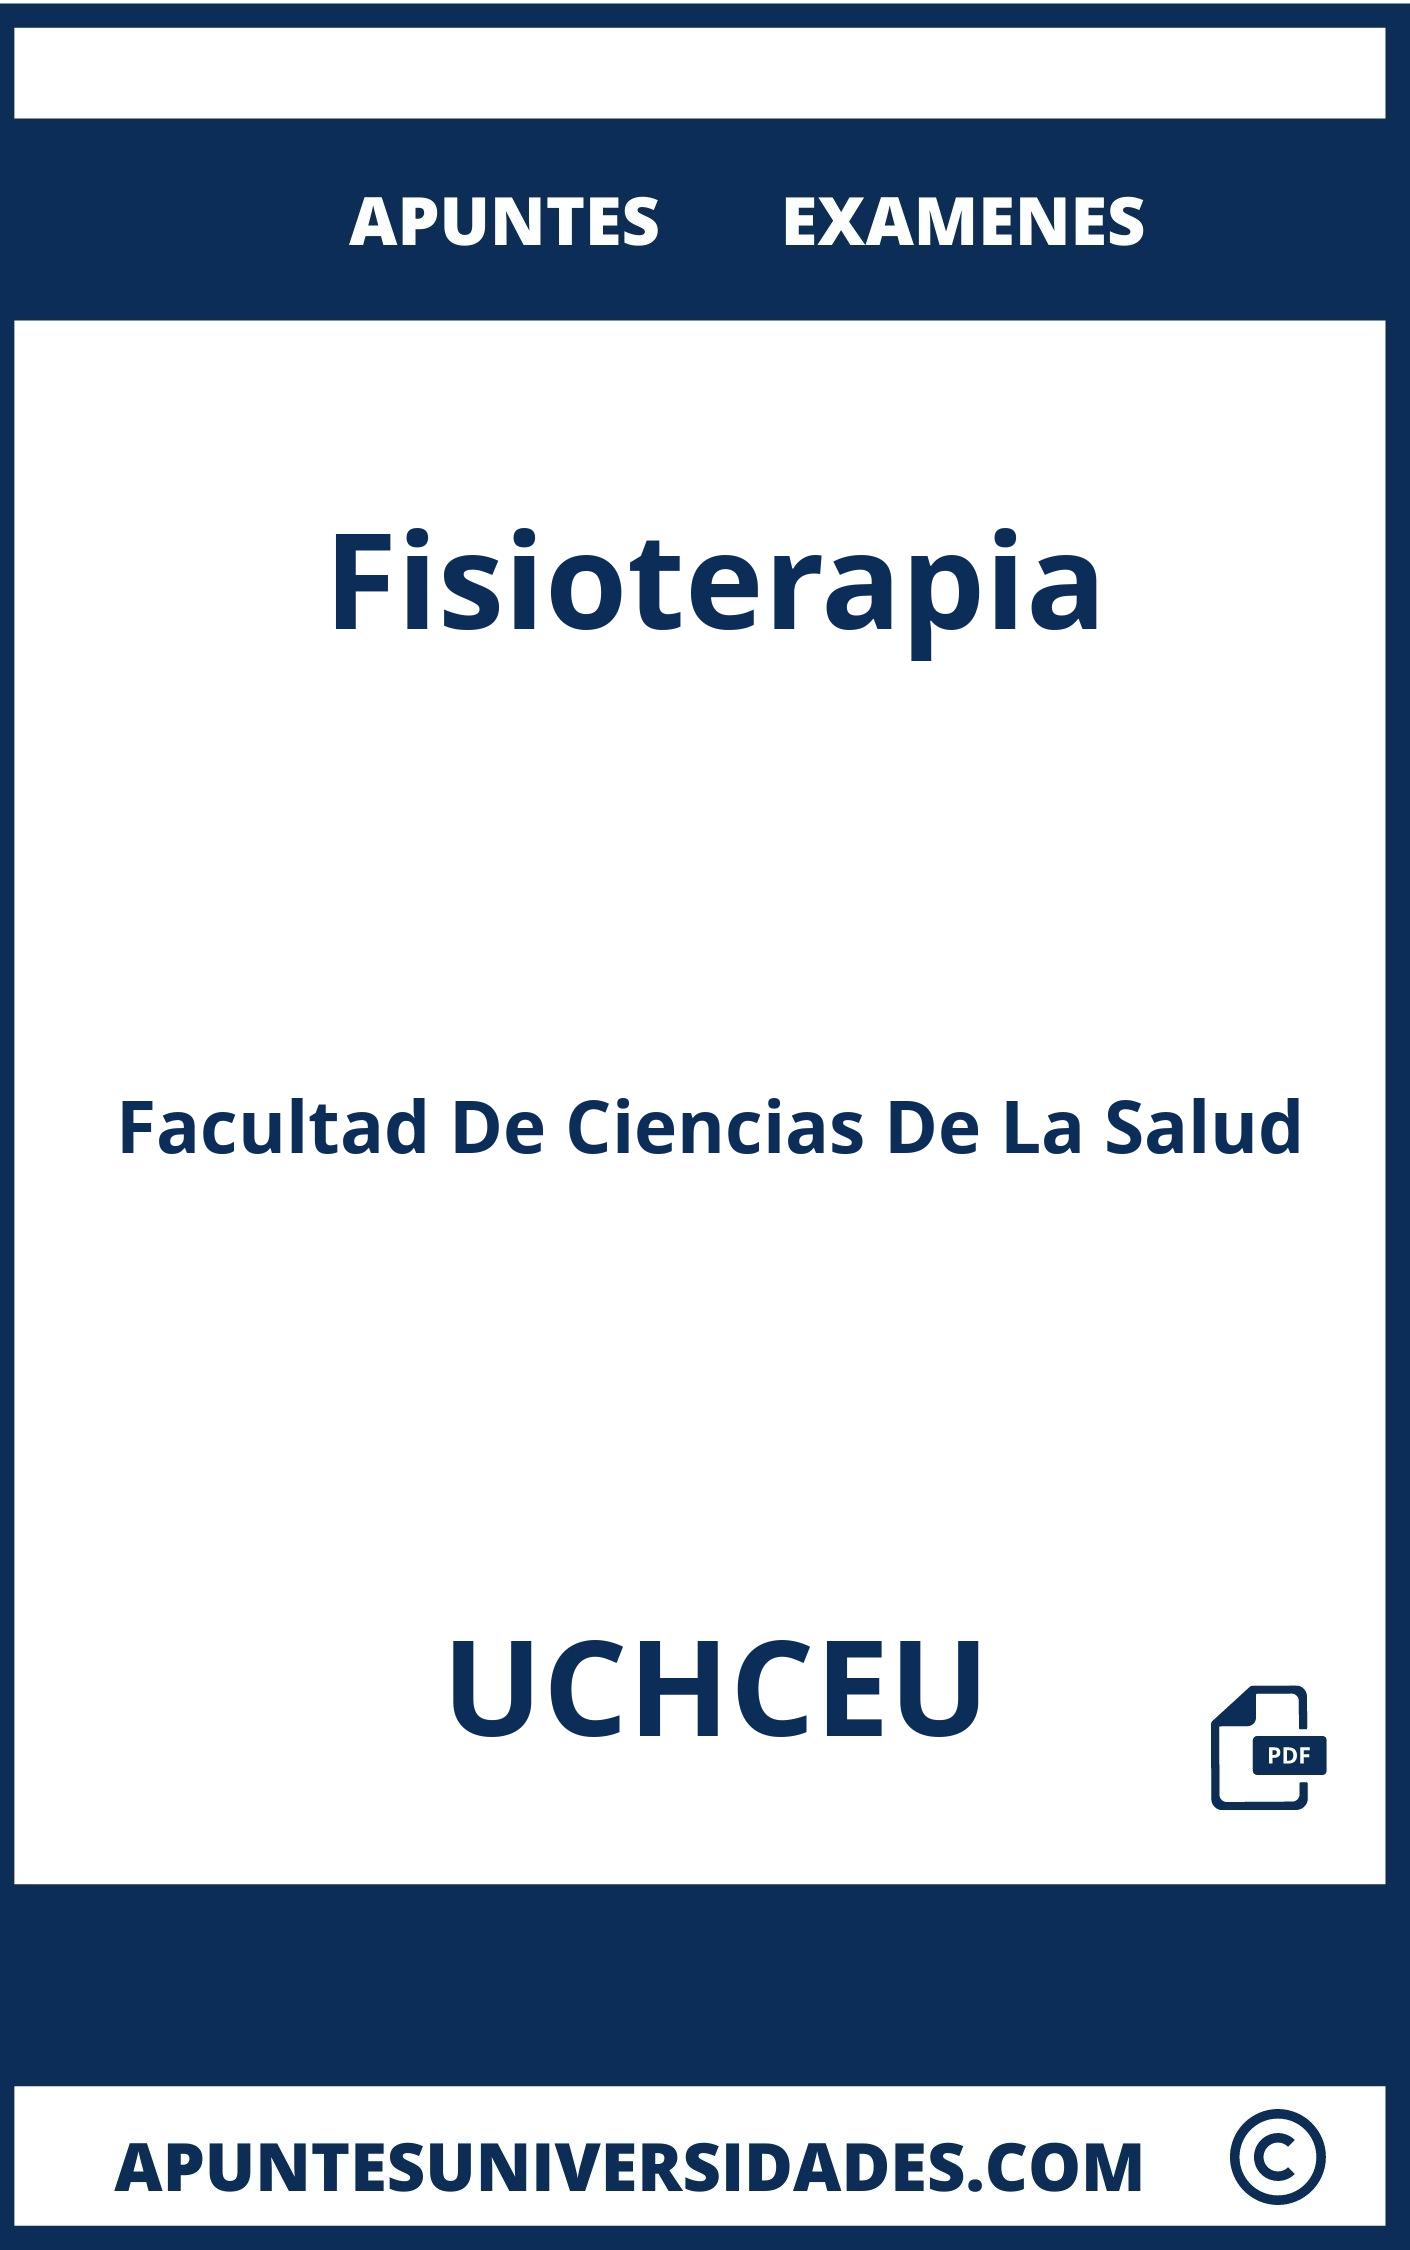 Examenes Apuntes Fisioterapia UCHCEU